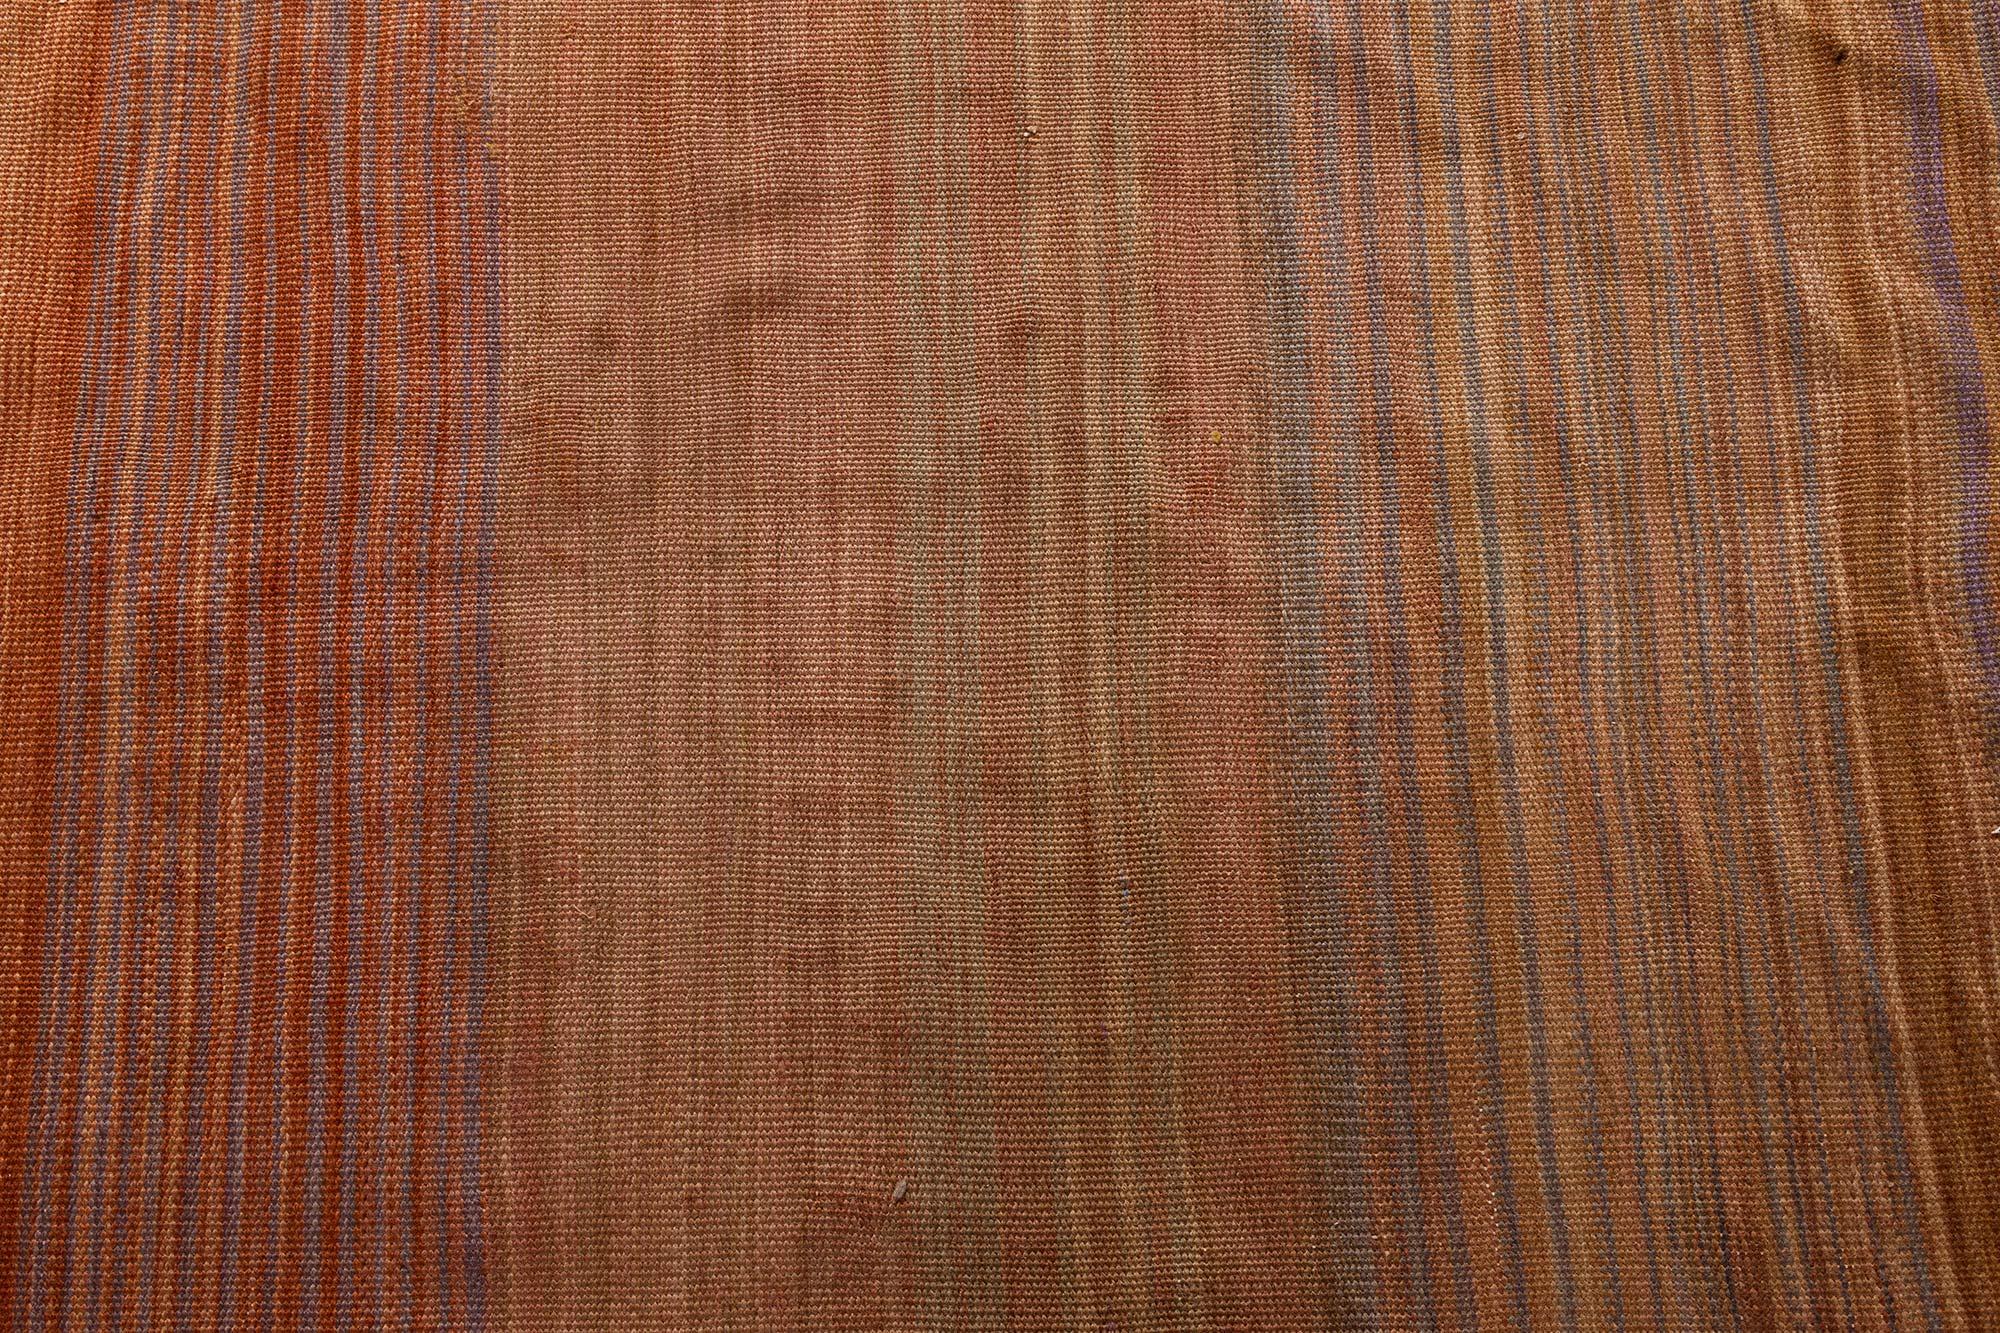 Vintage Aubusson carpet (size adjusted)
Size: 12'2